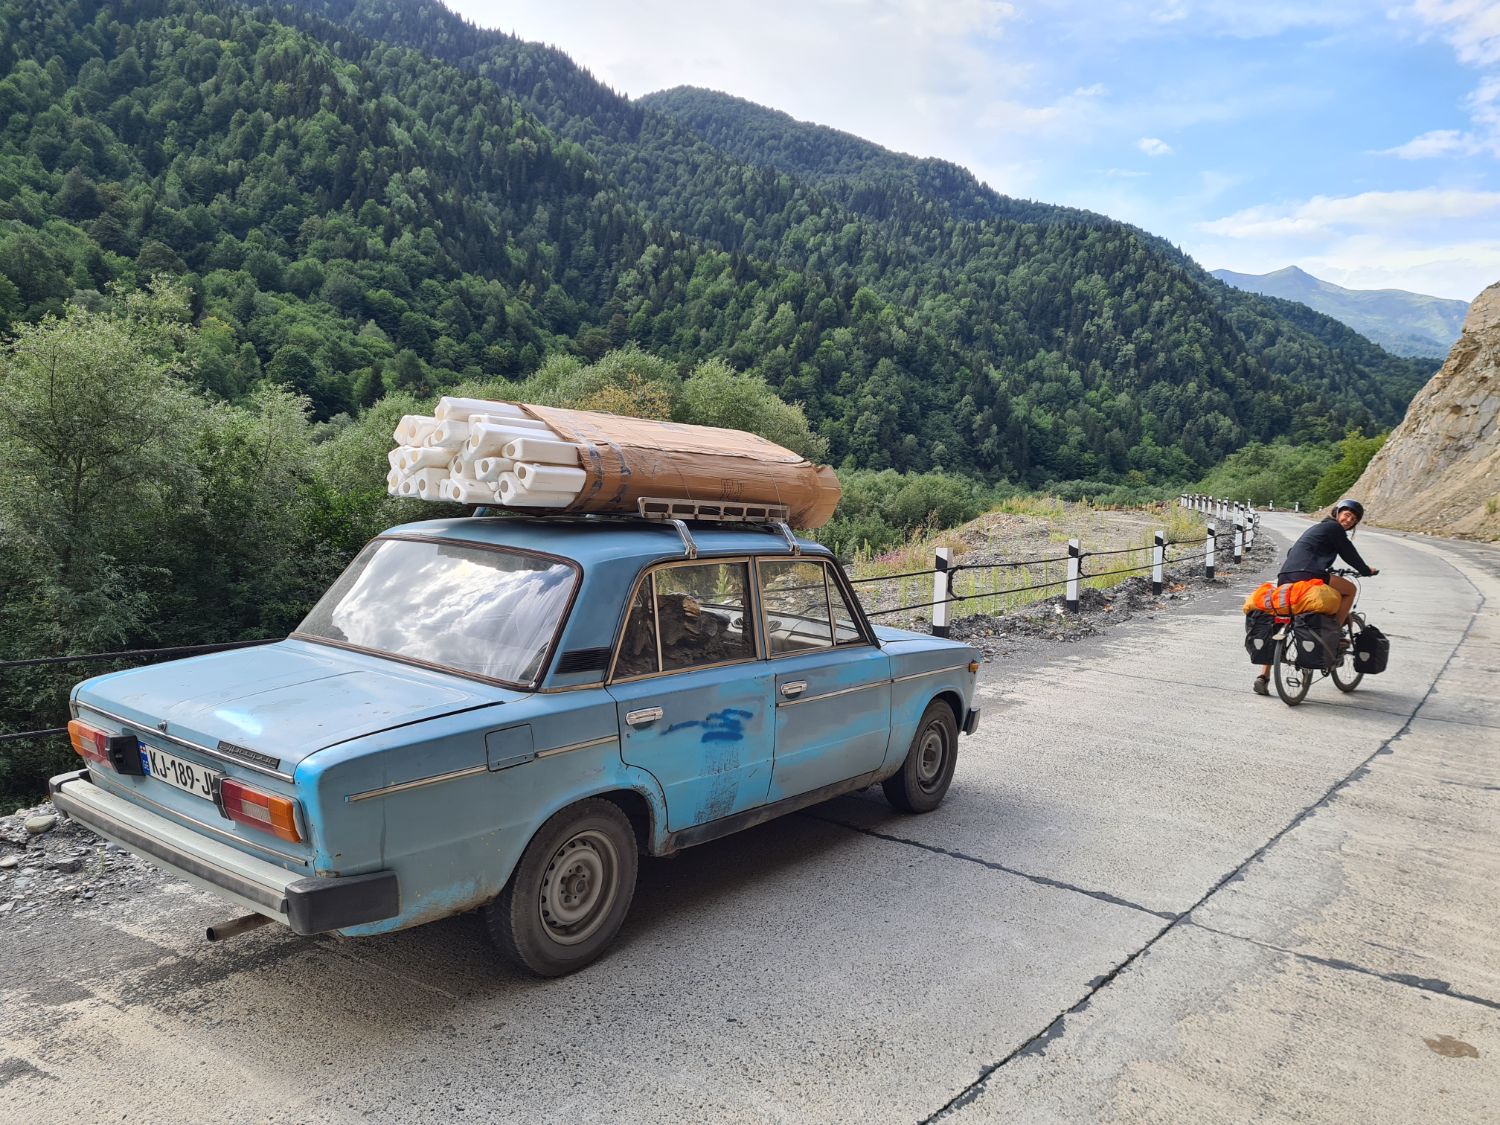 Road works using a Soviet-era Lada